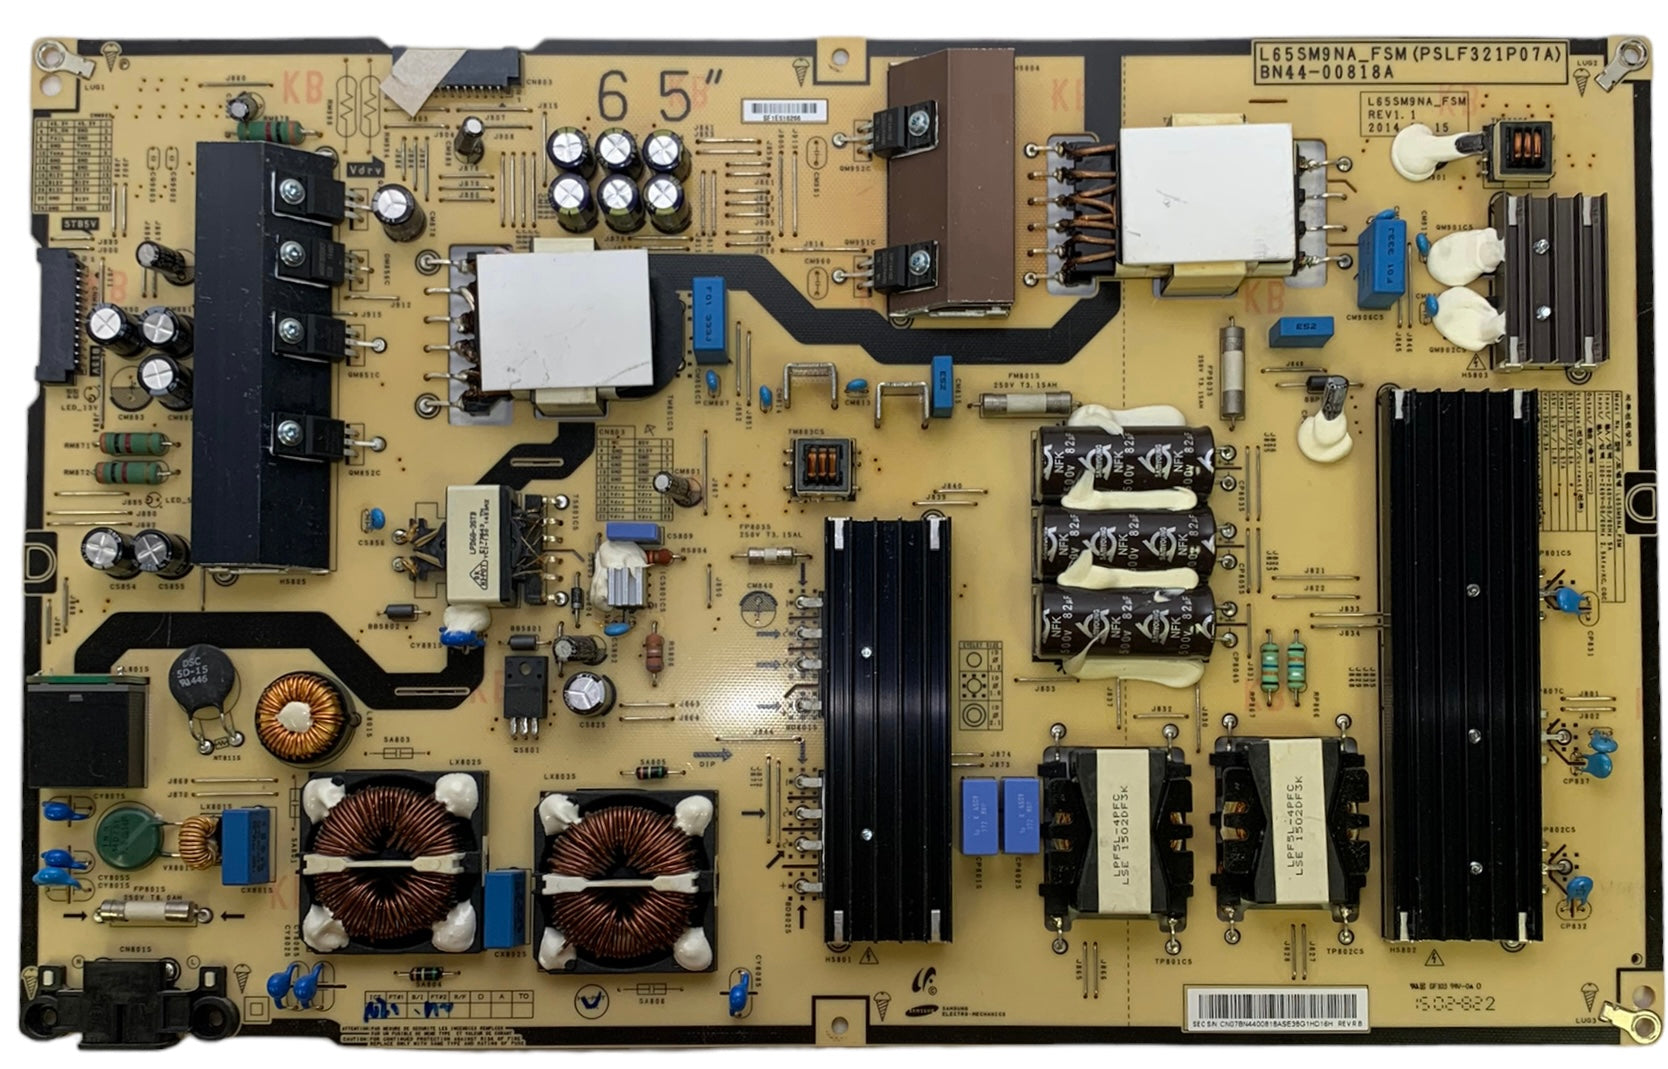 Samsung BN44-00818A Power Supply / LED Board